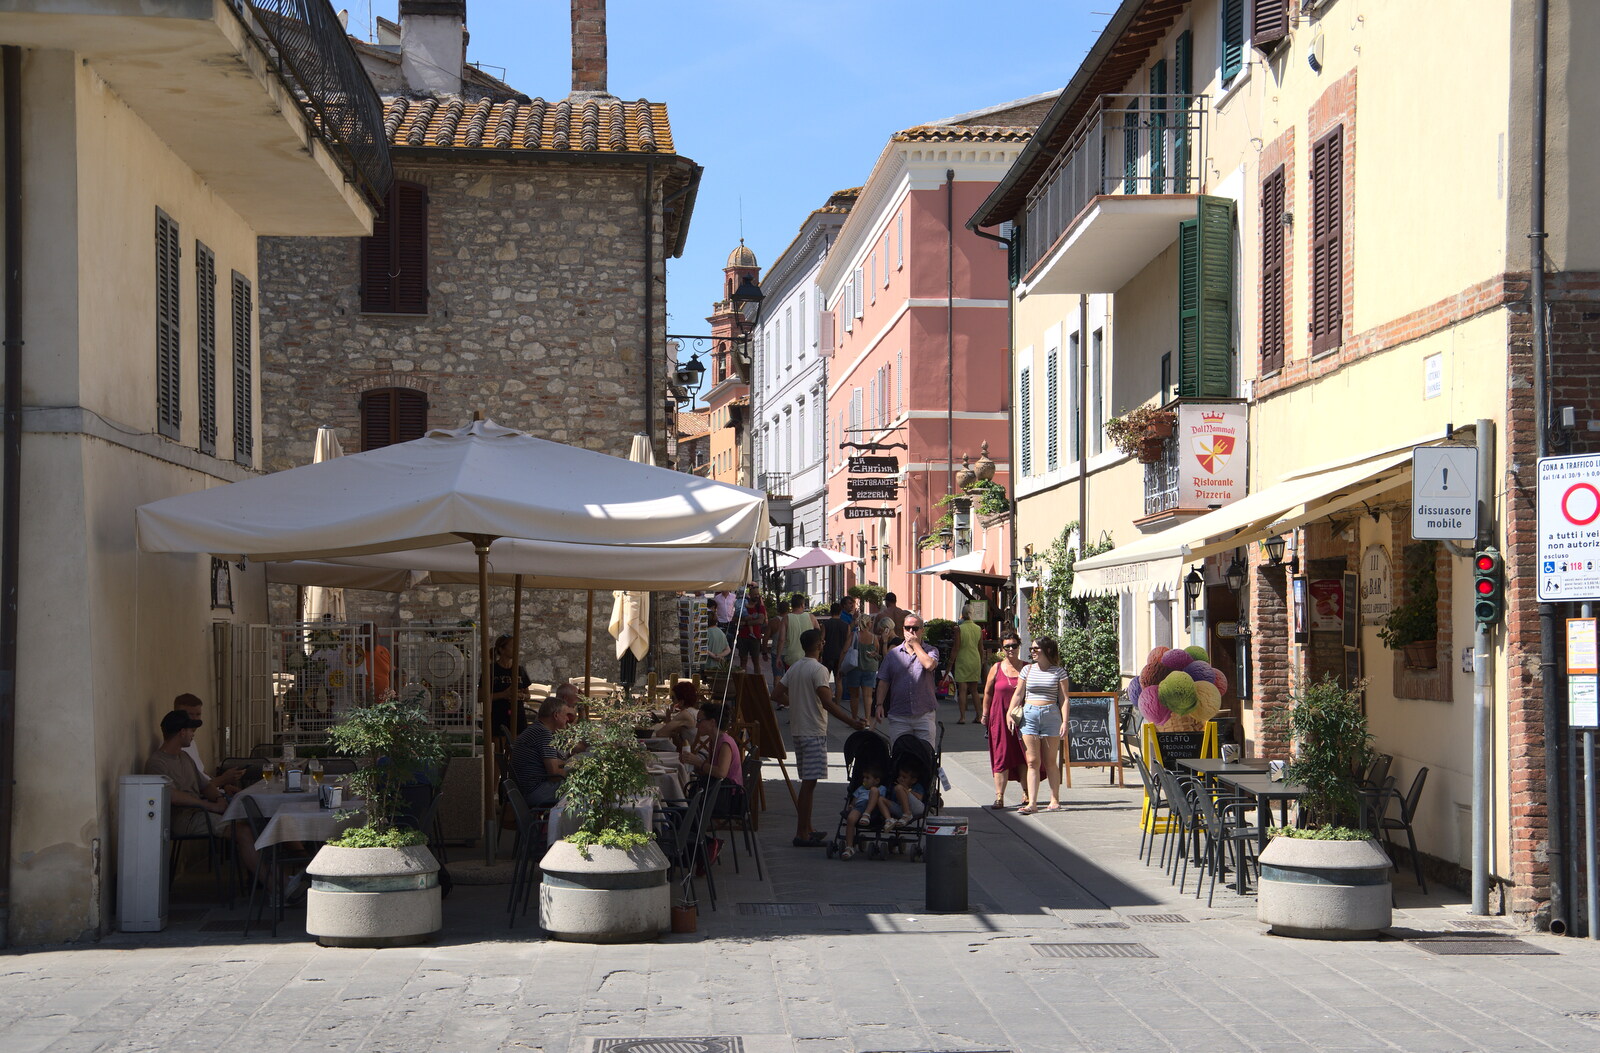 Castiglio Del Lago and Santuario della Verna, Umbria and Tuscany, Italy - 1st September 2022: The main street through the old quarter